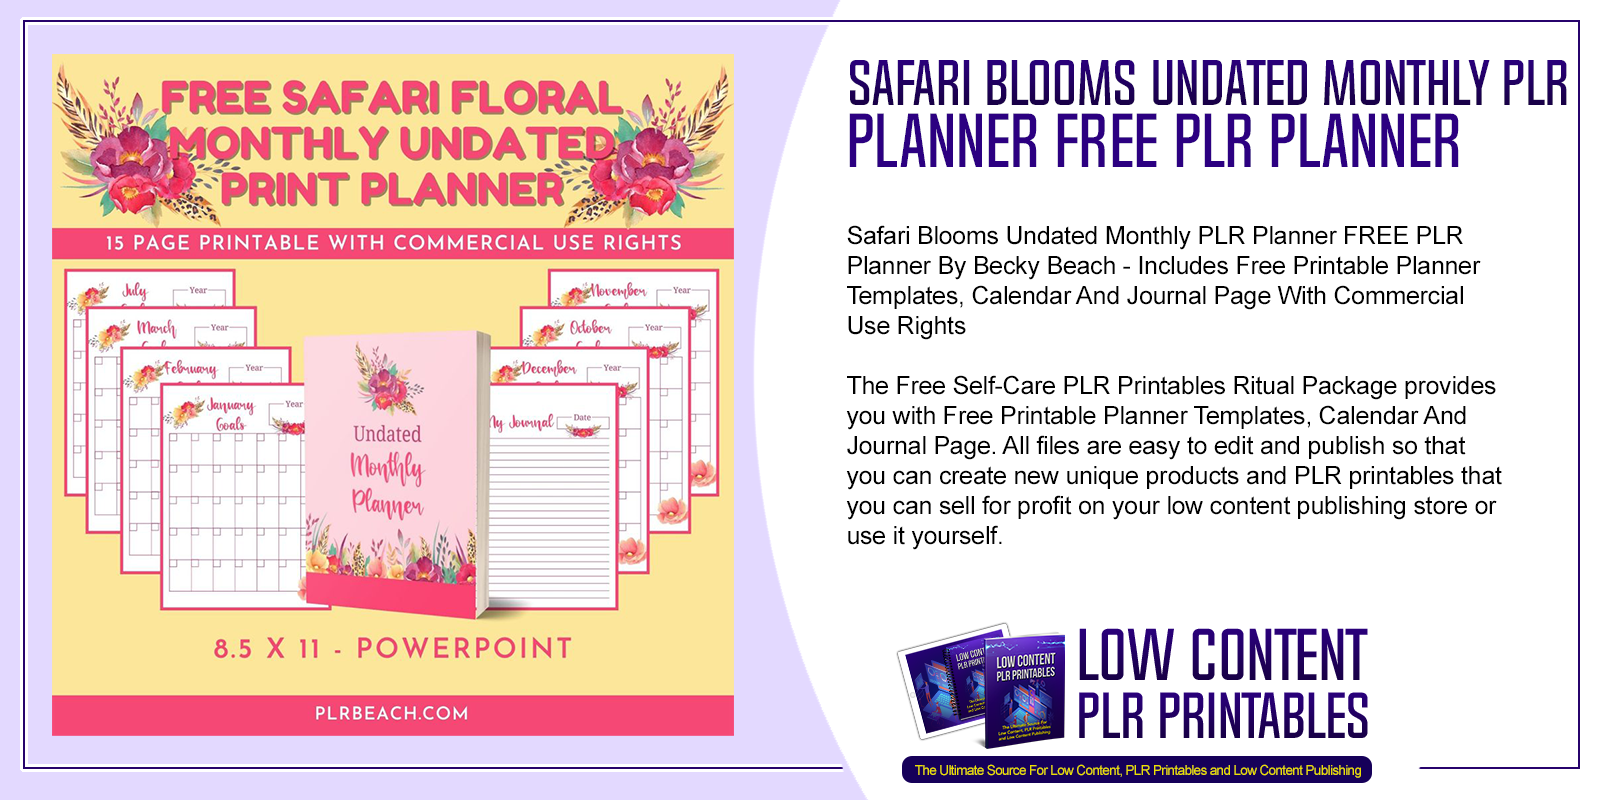 Safari Blooms Undated Monthly PLR Planner FREE PLR Planner